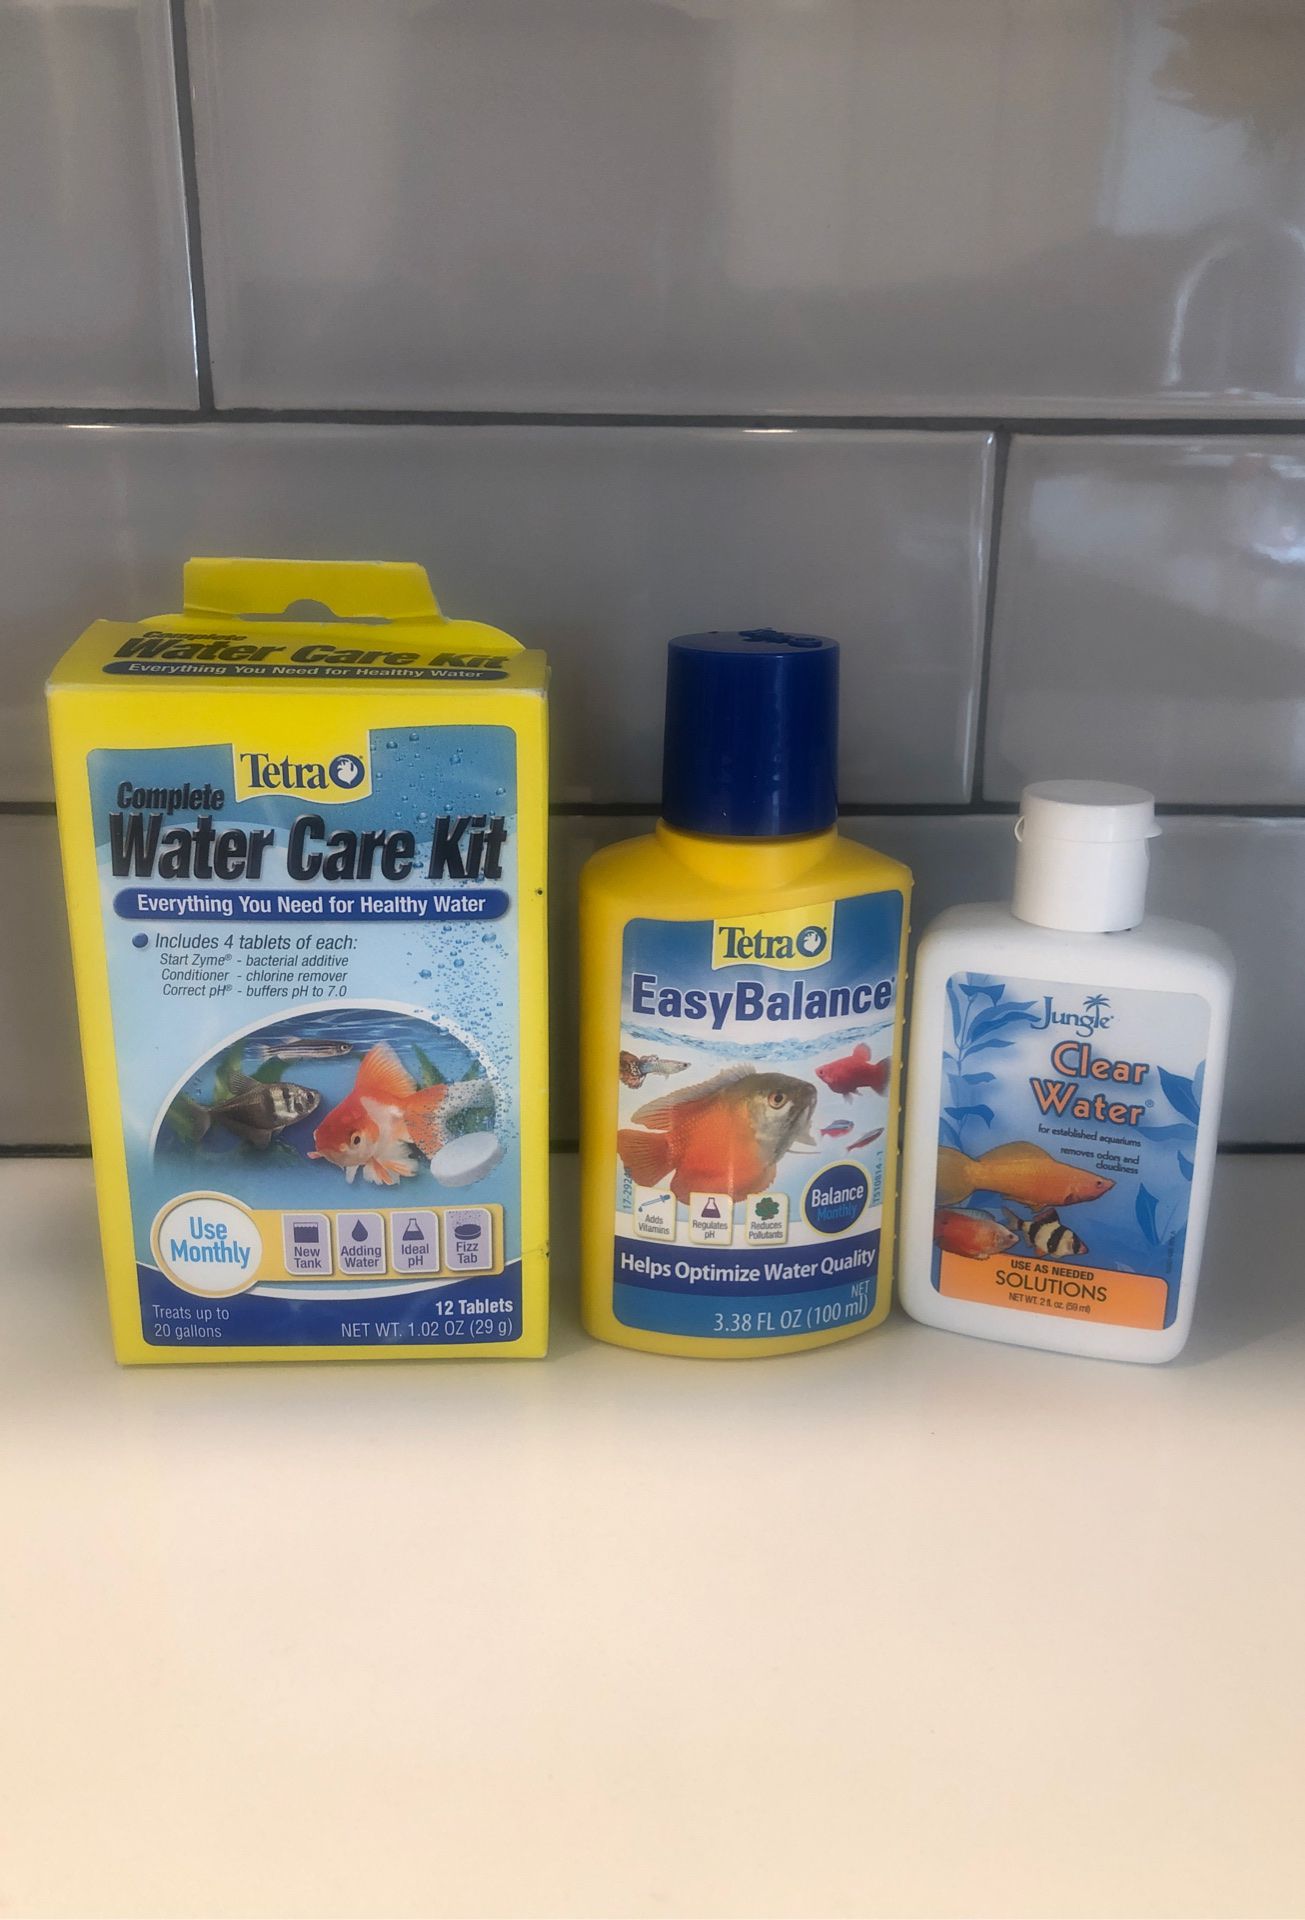 Water Care Kit for fish tanks